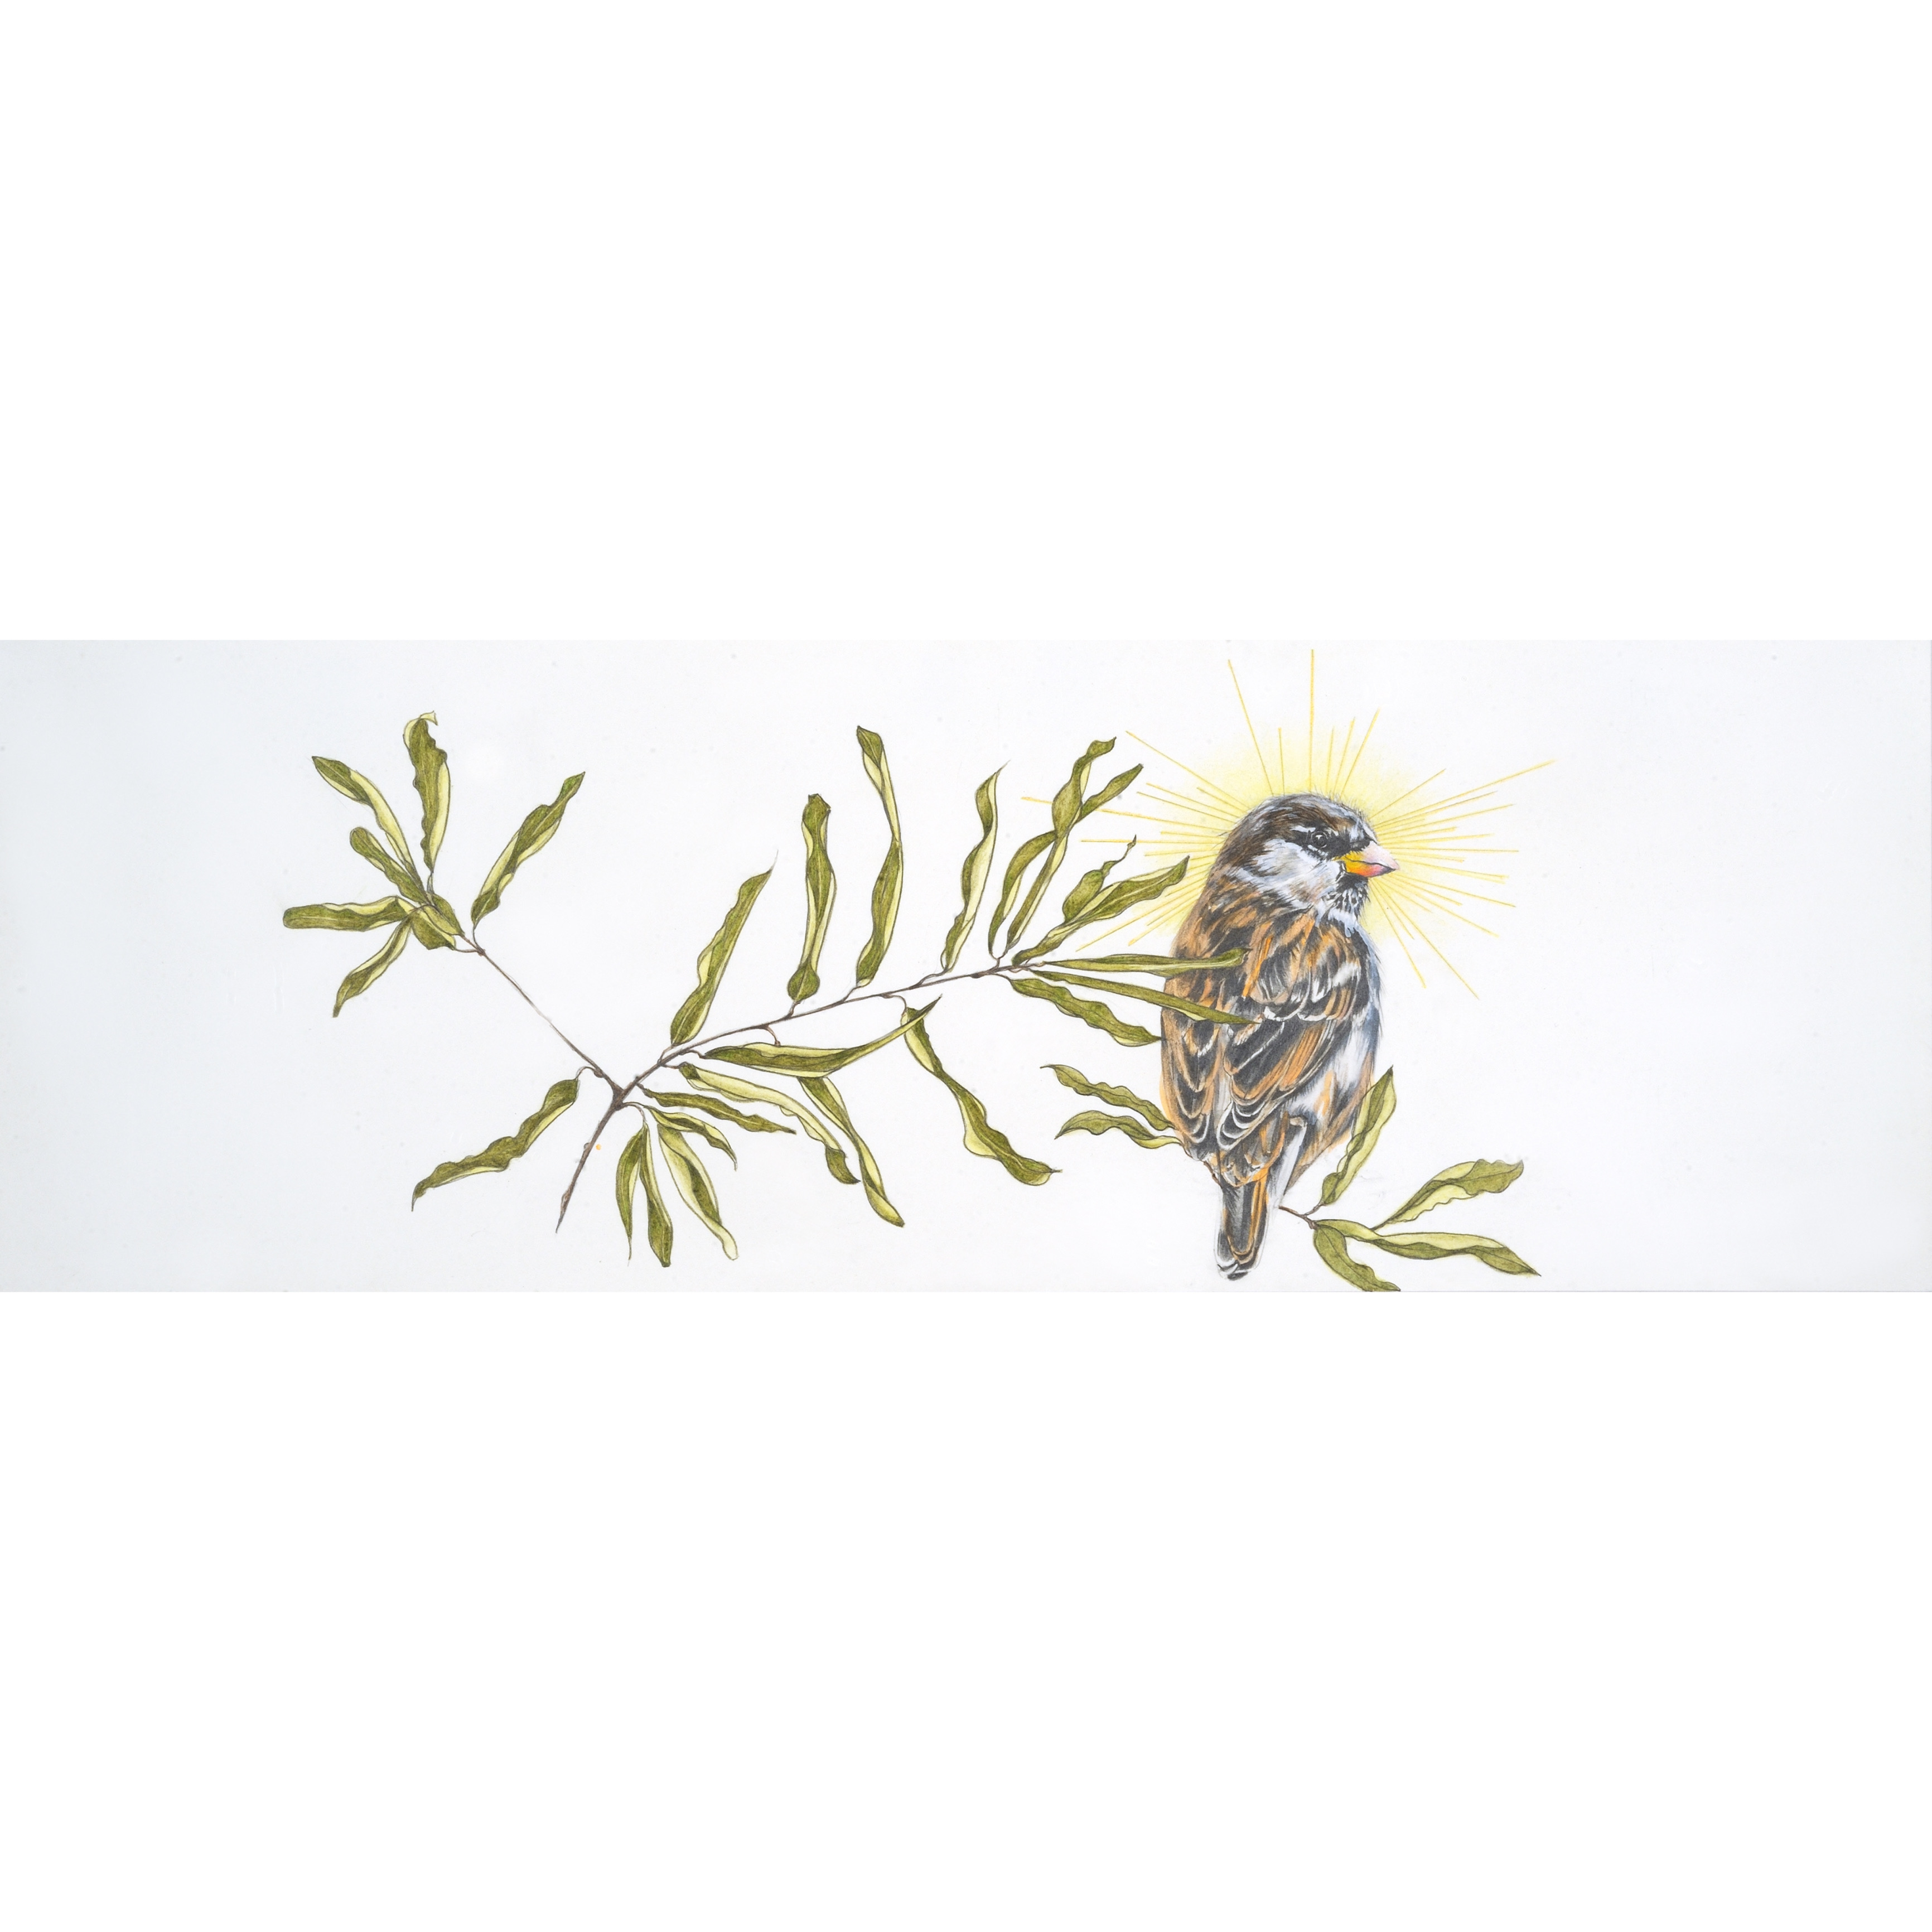 Rebecca Clark: Saint Sparrow, 2020, graphite, colored pencil, powdered pigment, shell gold on paper, 7.5 x 22 inches